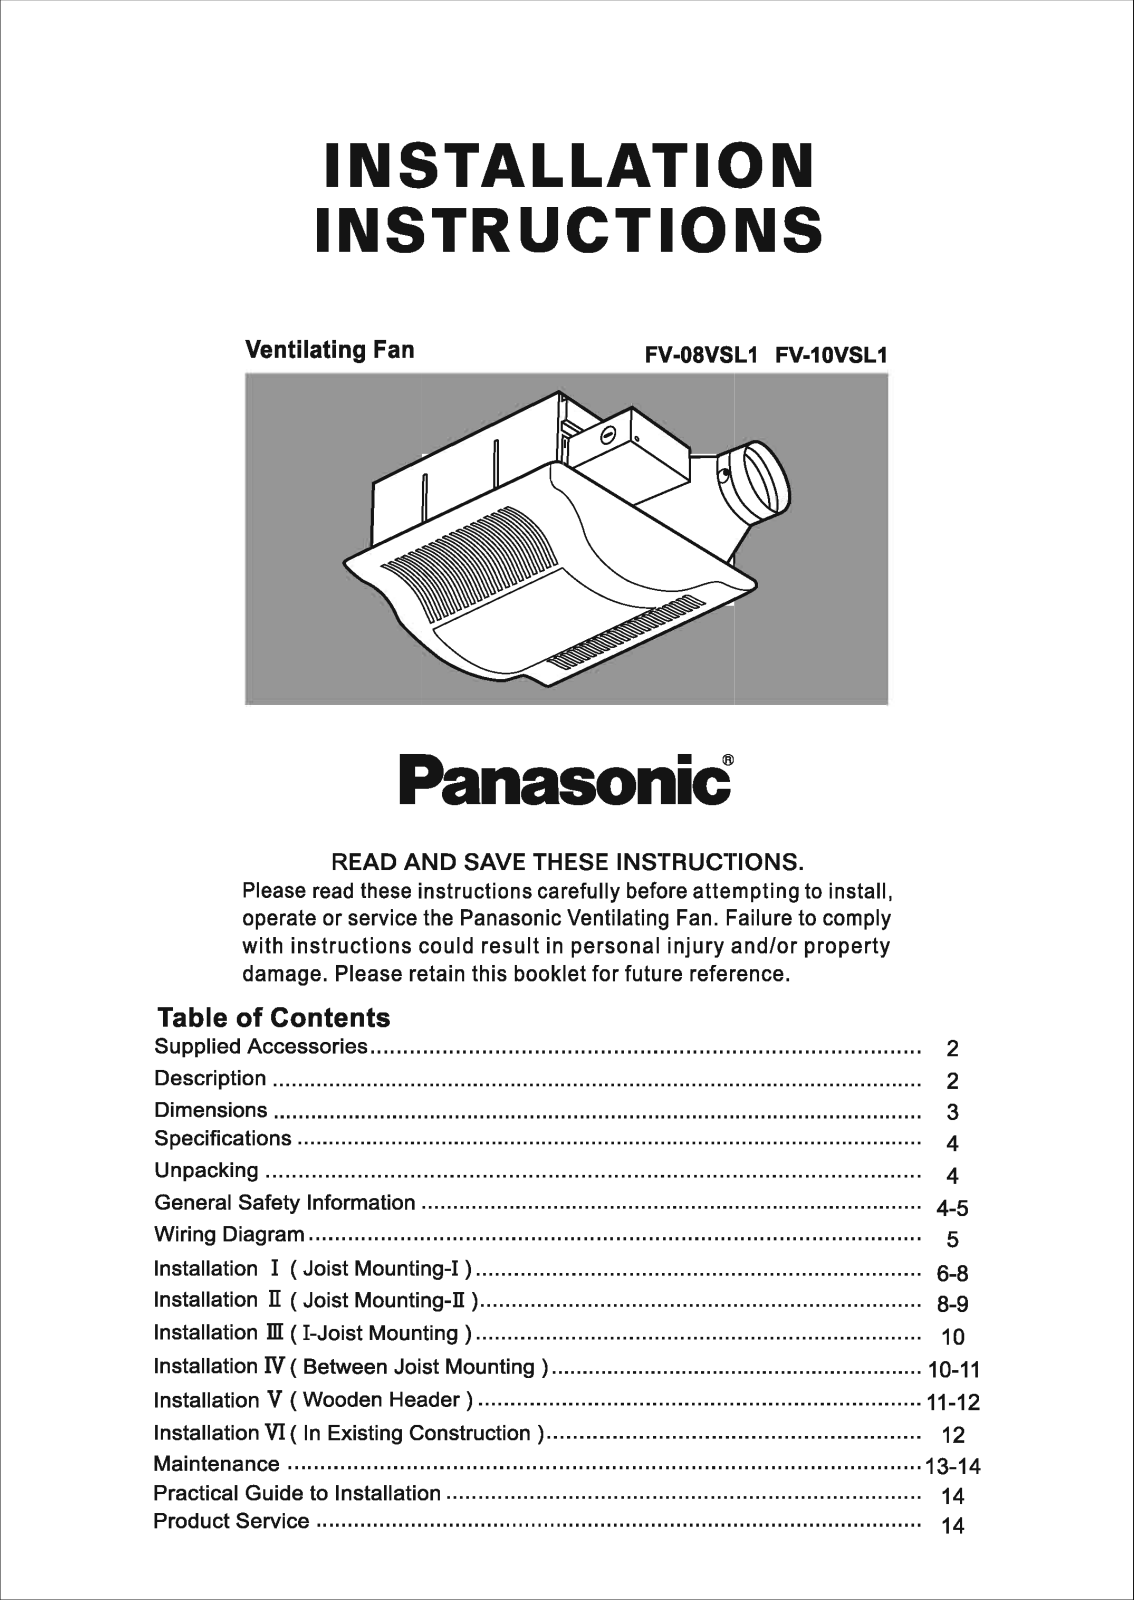 Panasonic fv-0810vsl1 Operation Manual